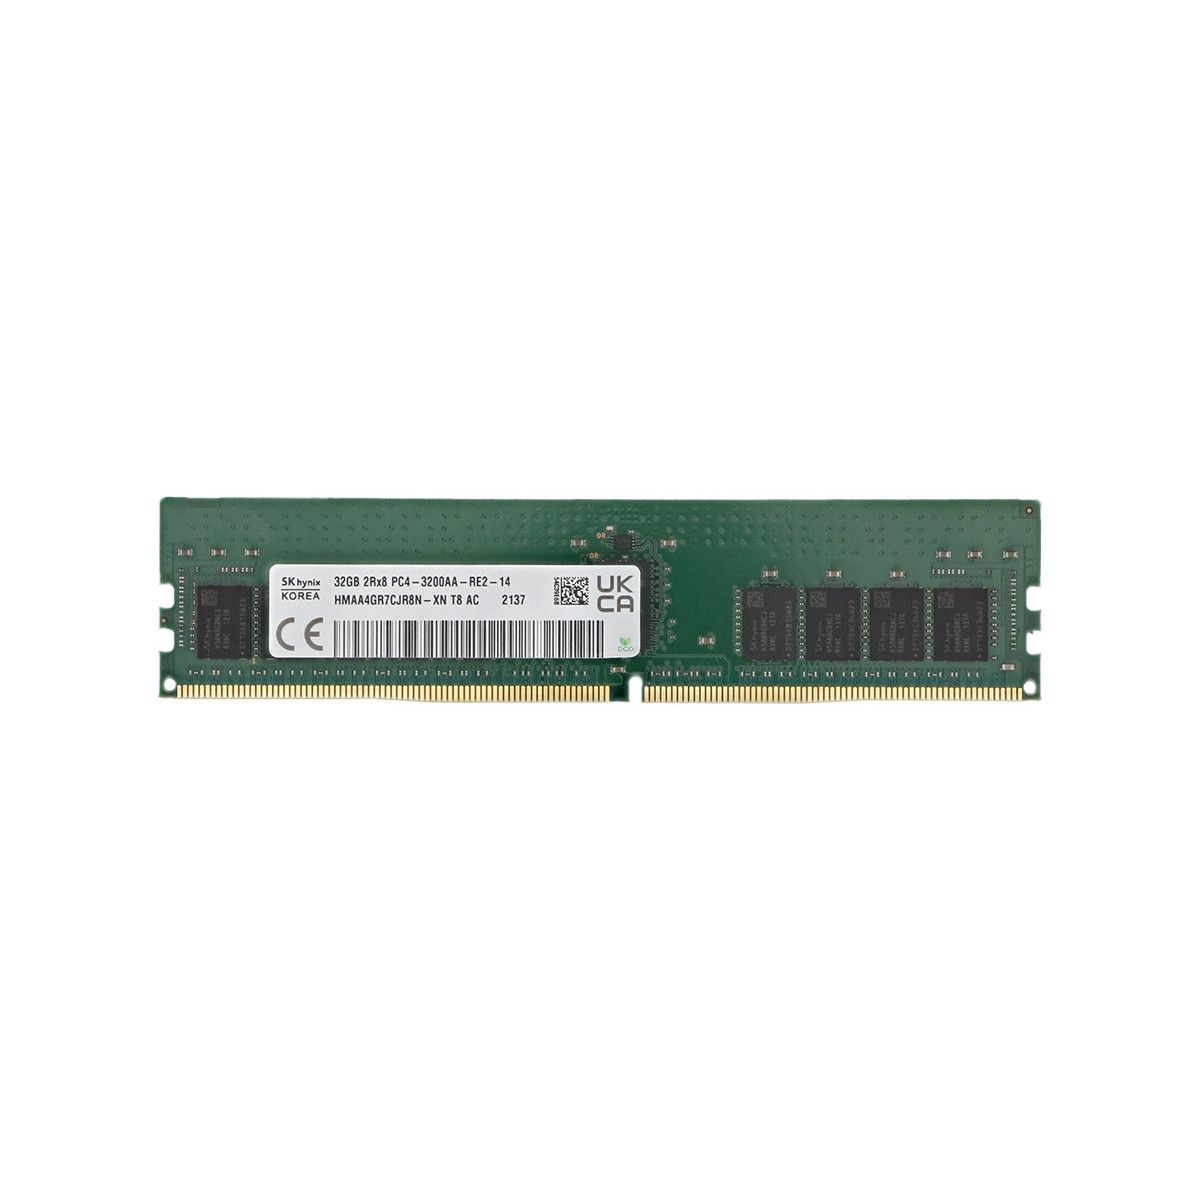 AB614353-MS - Memstar 1x 32GB DDR4-3200 RDIMM PC4-25600R - OEM compatible con Mem-Star Memoria 1 - Memstar 